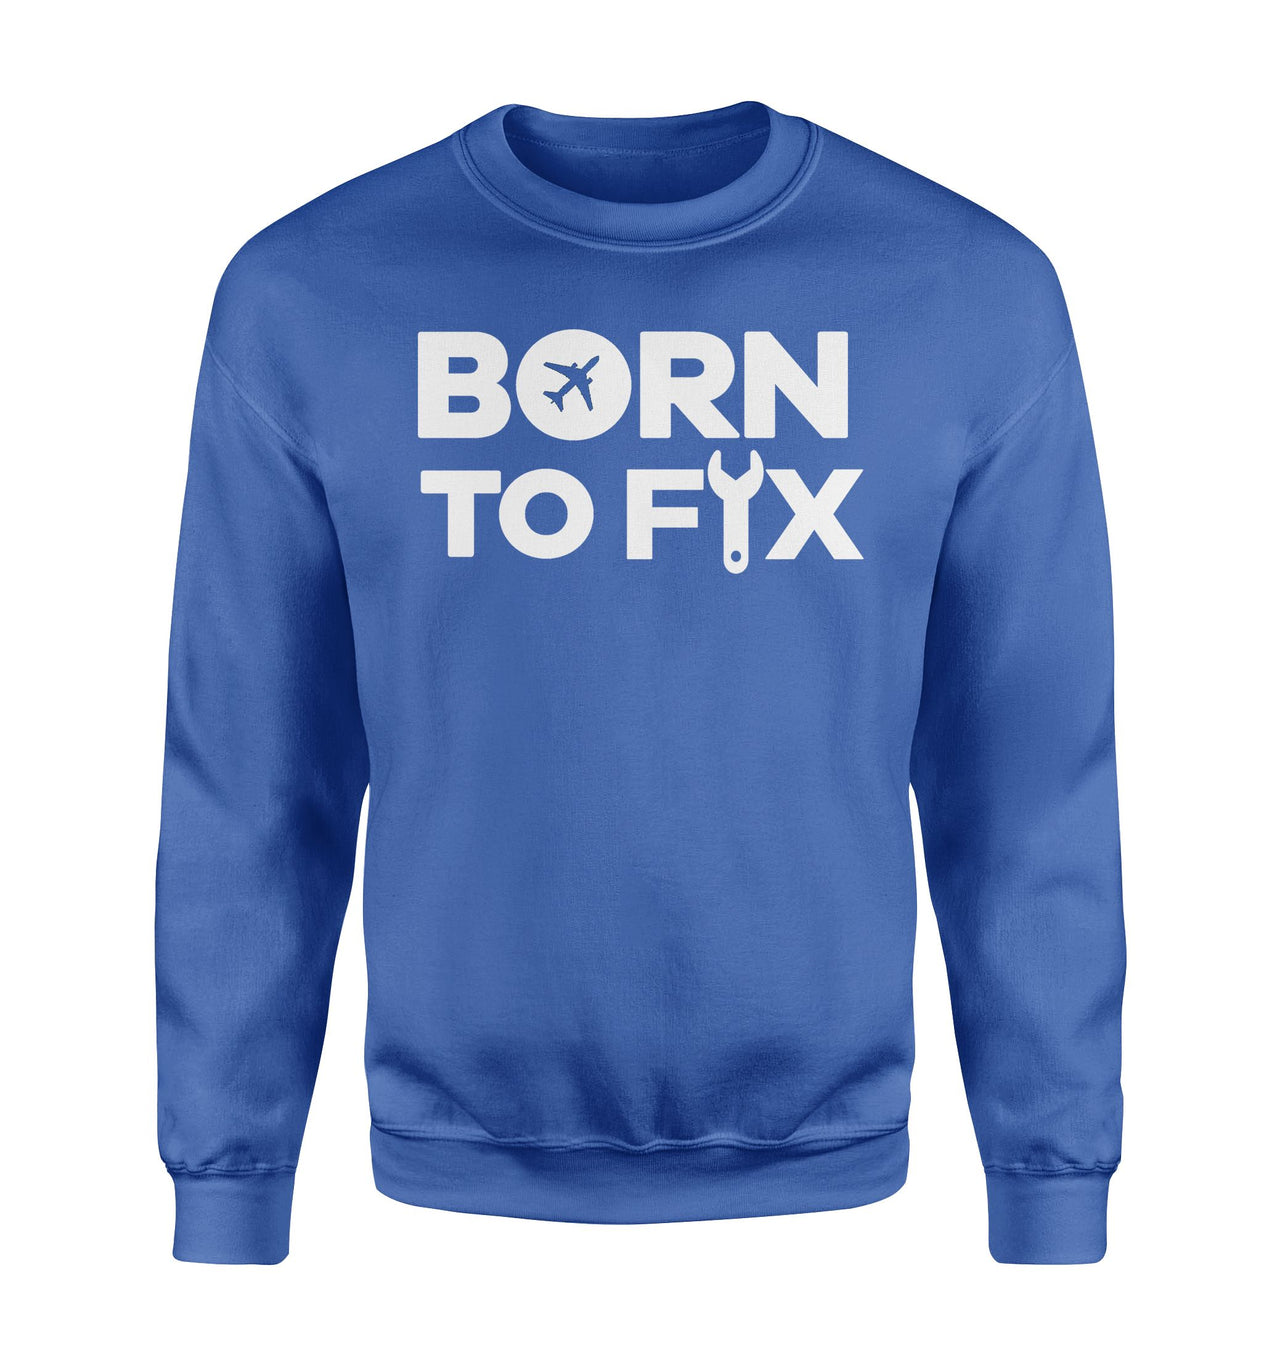 Born To Fix Airplanes Designed Sweatshirts